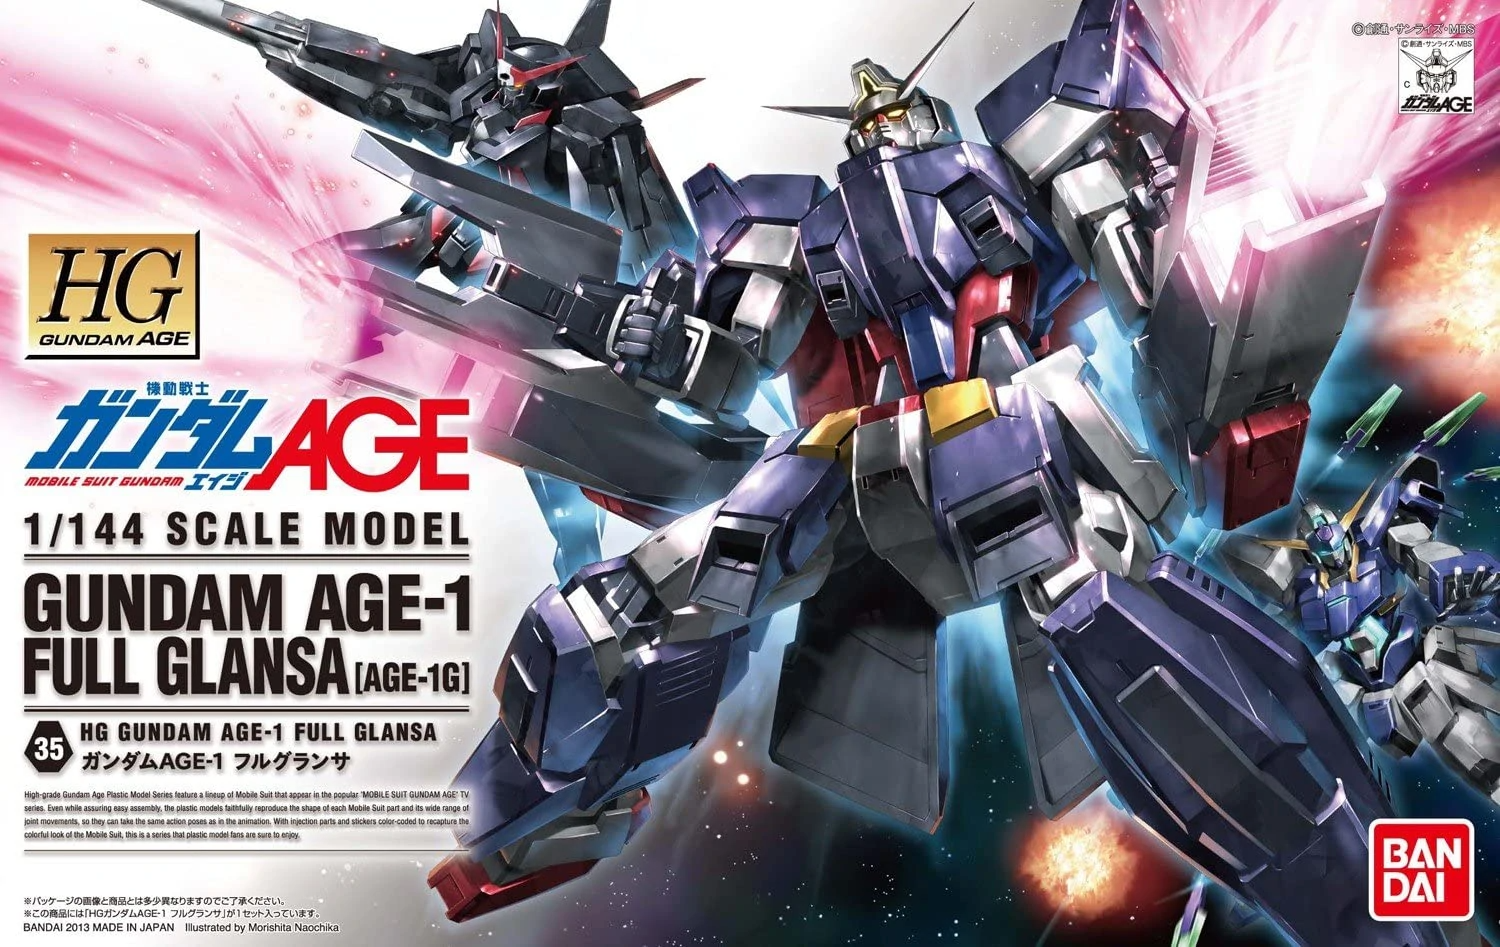 Gundam HG Gundam Age - Gundam Age-1 Full Glansa #35